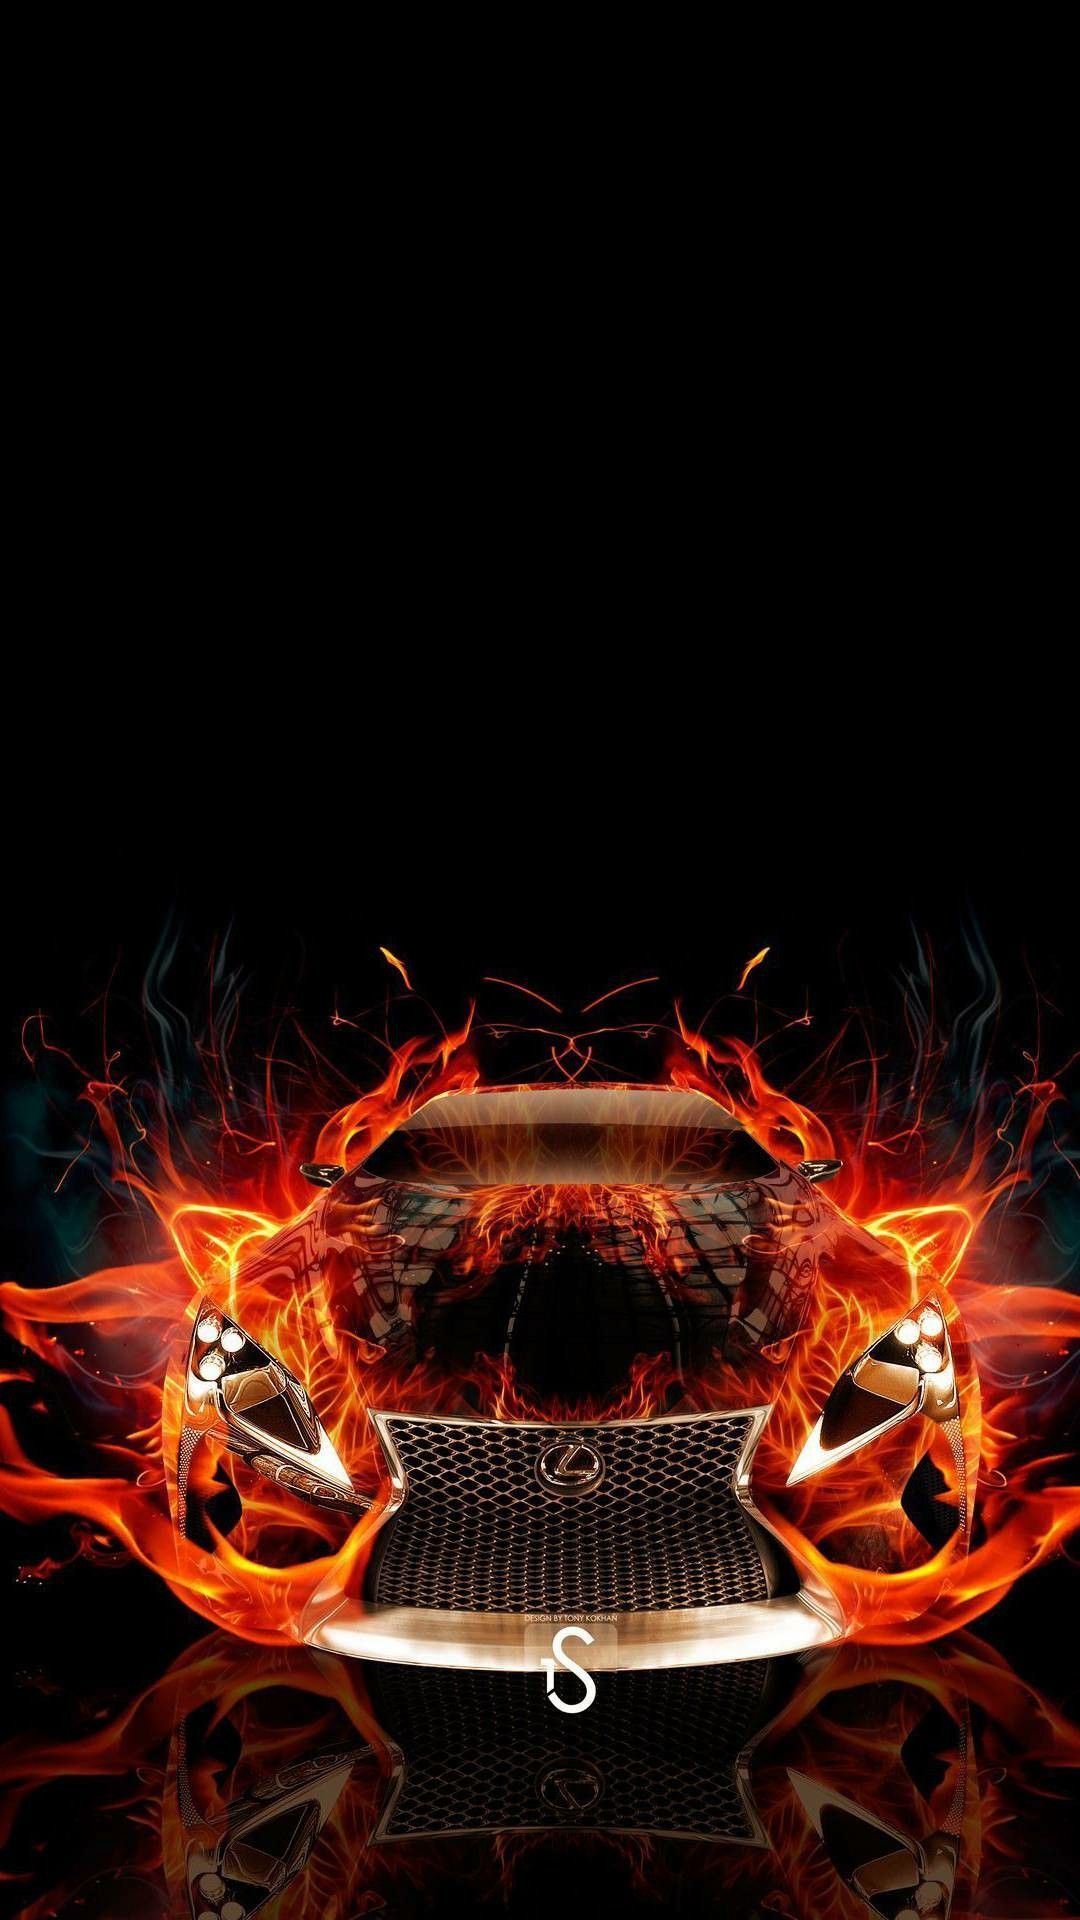  Coole Auto Hintergrundbild 1080x1920. Fire car. Car wallpaper, Sports car wallpaper, Fancy cars